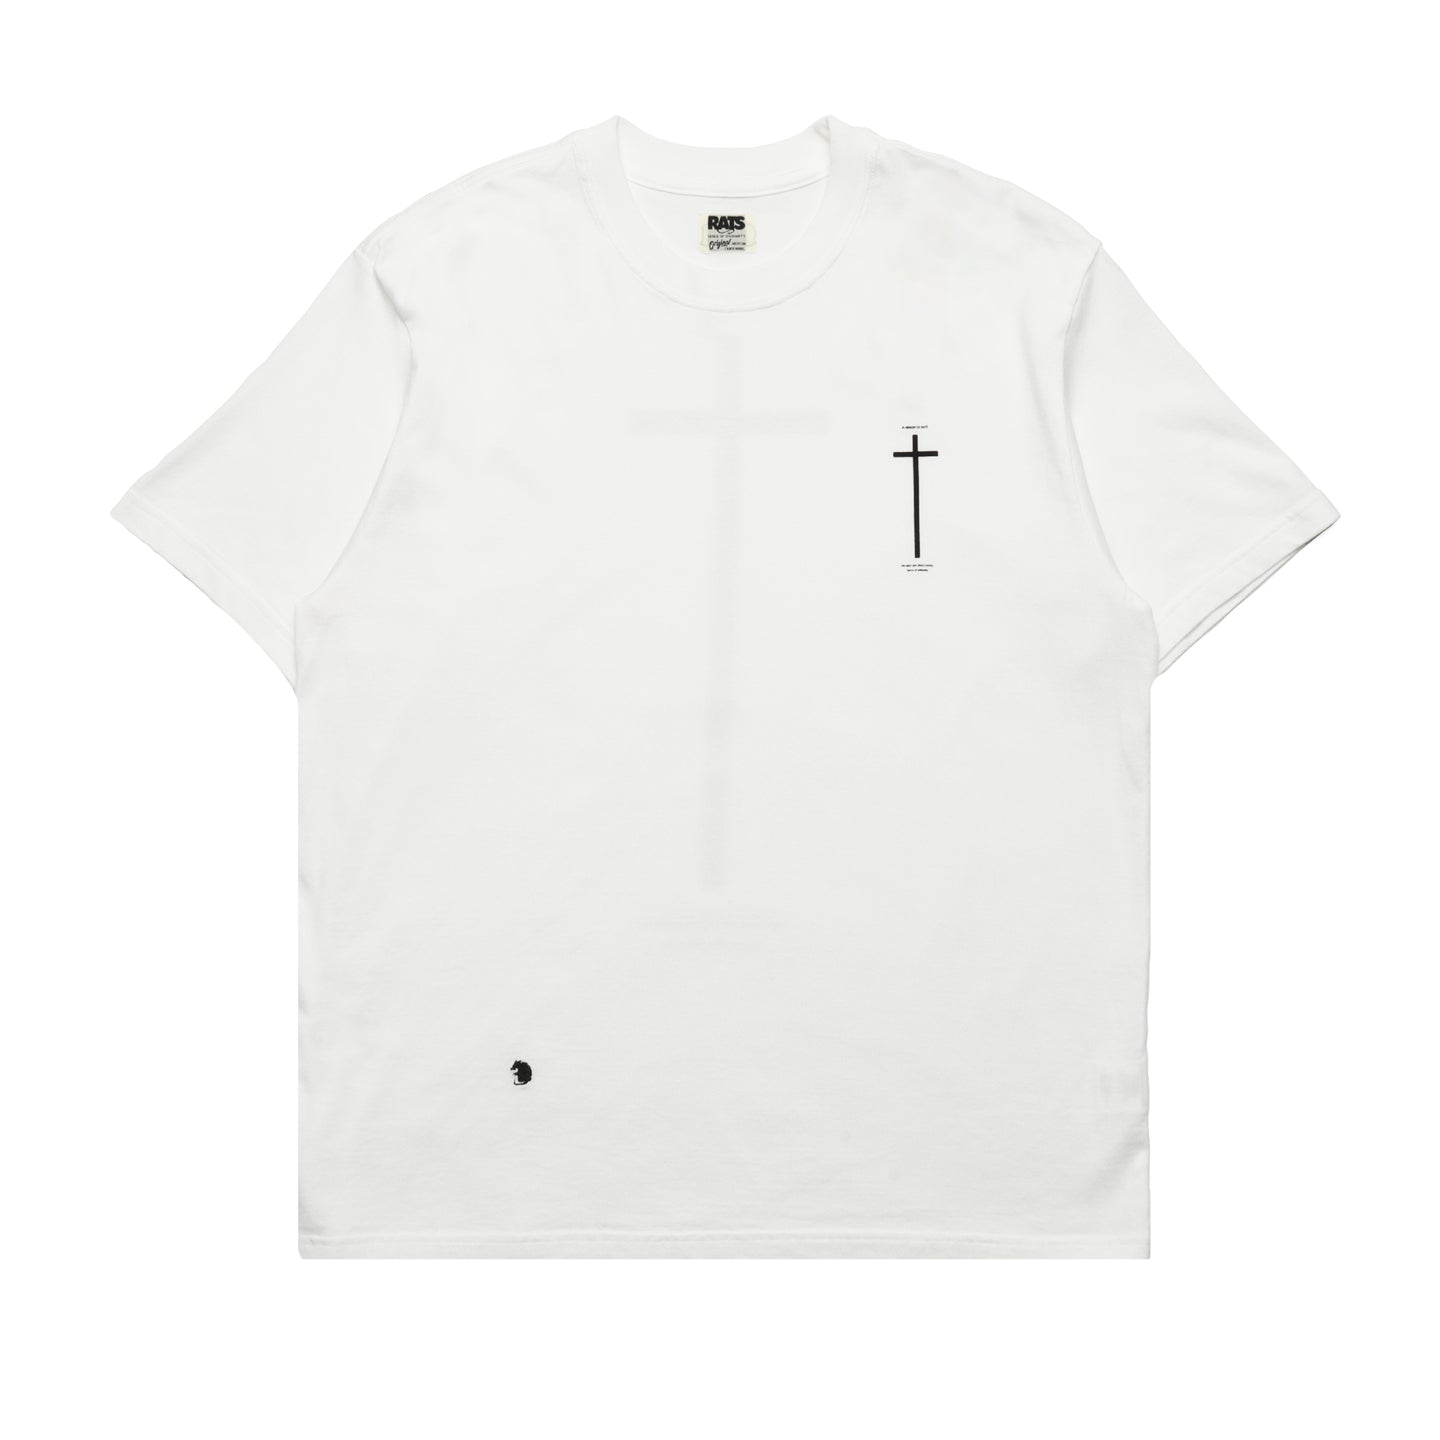 Rats Cross T-Shirt White